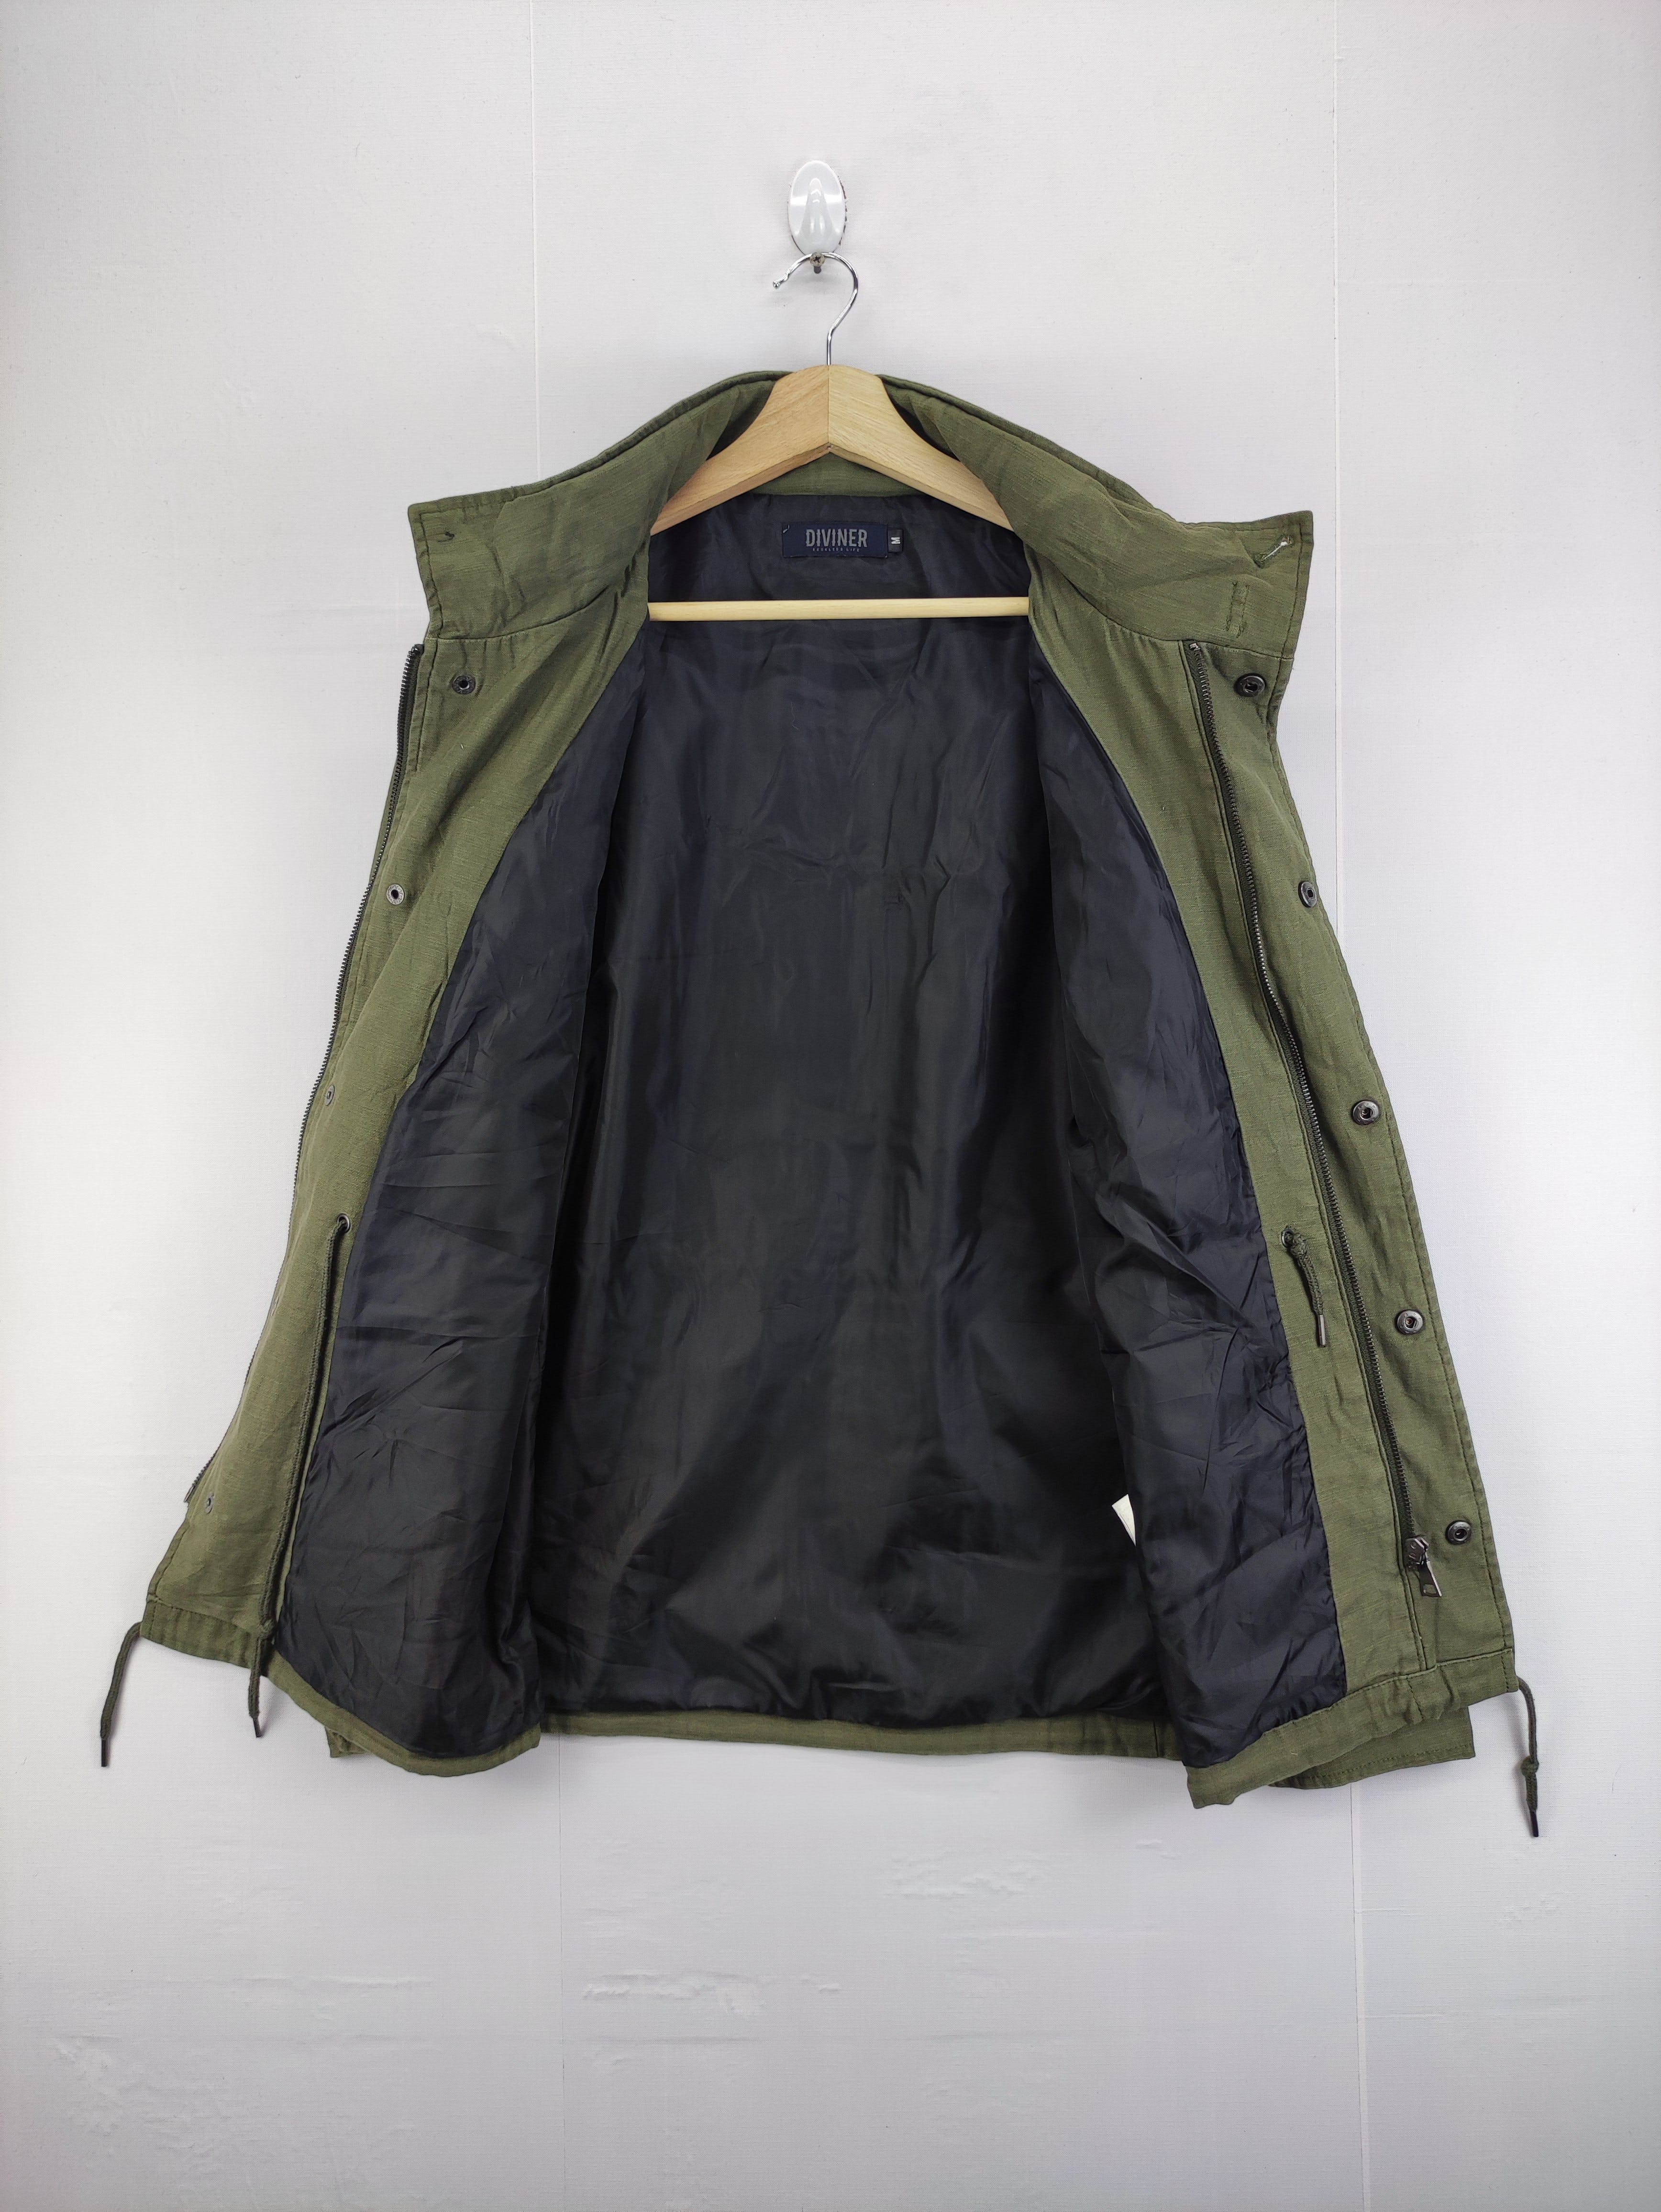 Vintage Jacket Military Zipper By Diviner - 6